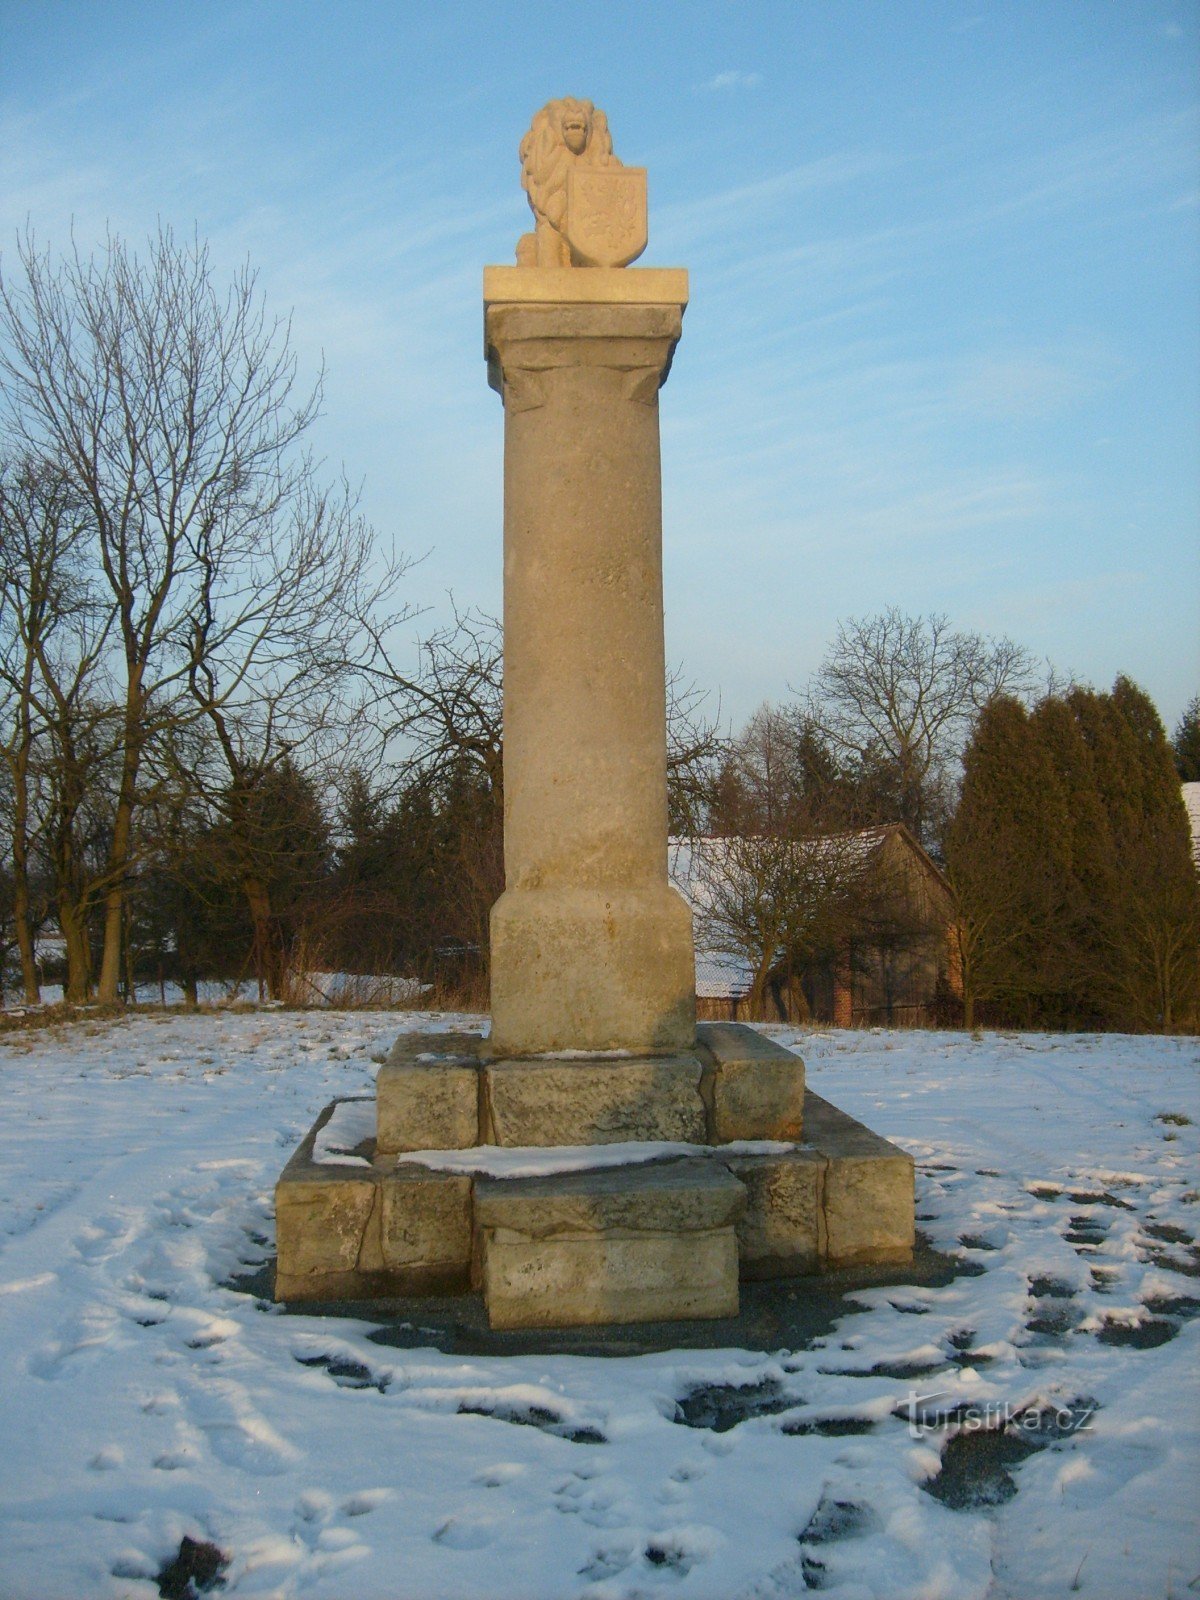 Denkmal in der Nähe des Dorfes Habřina